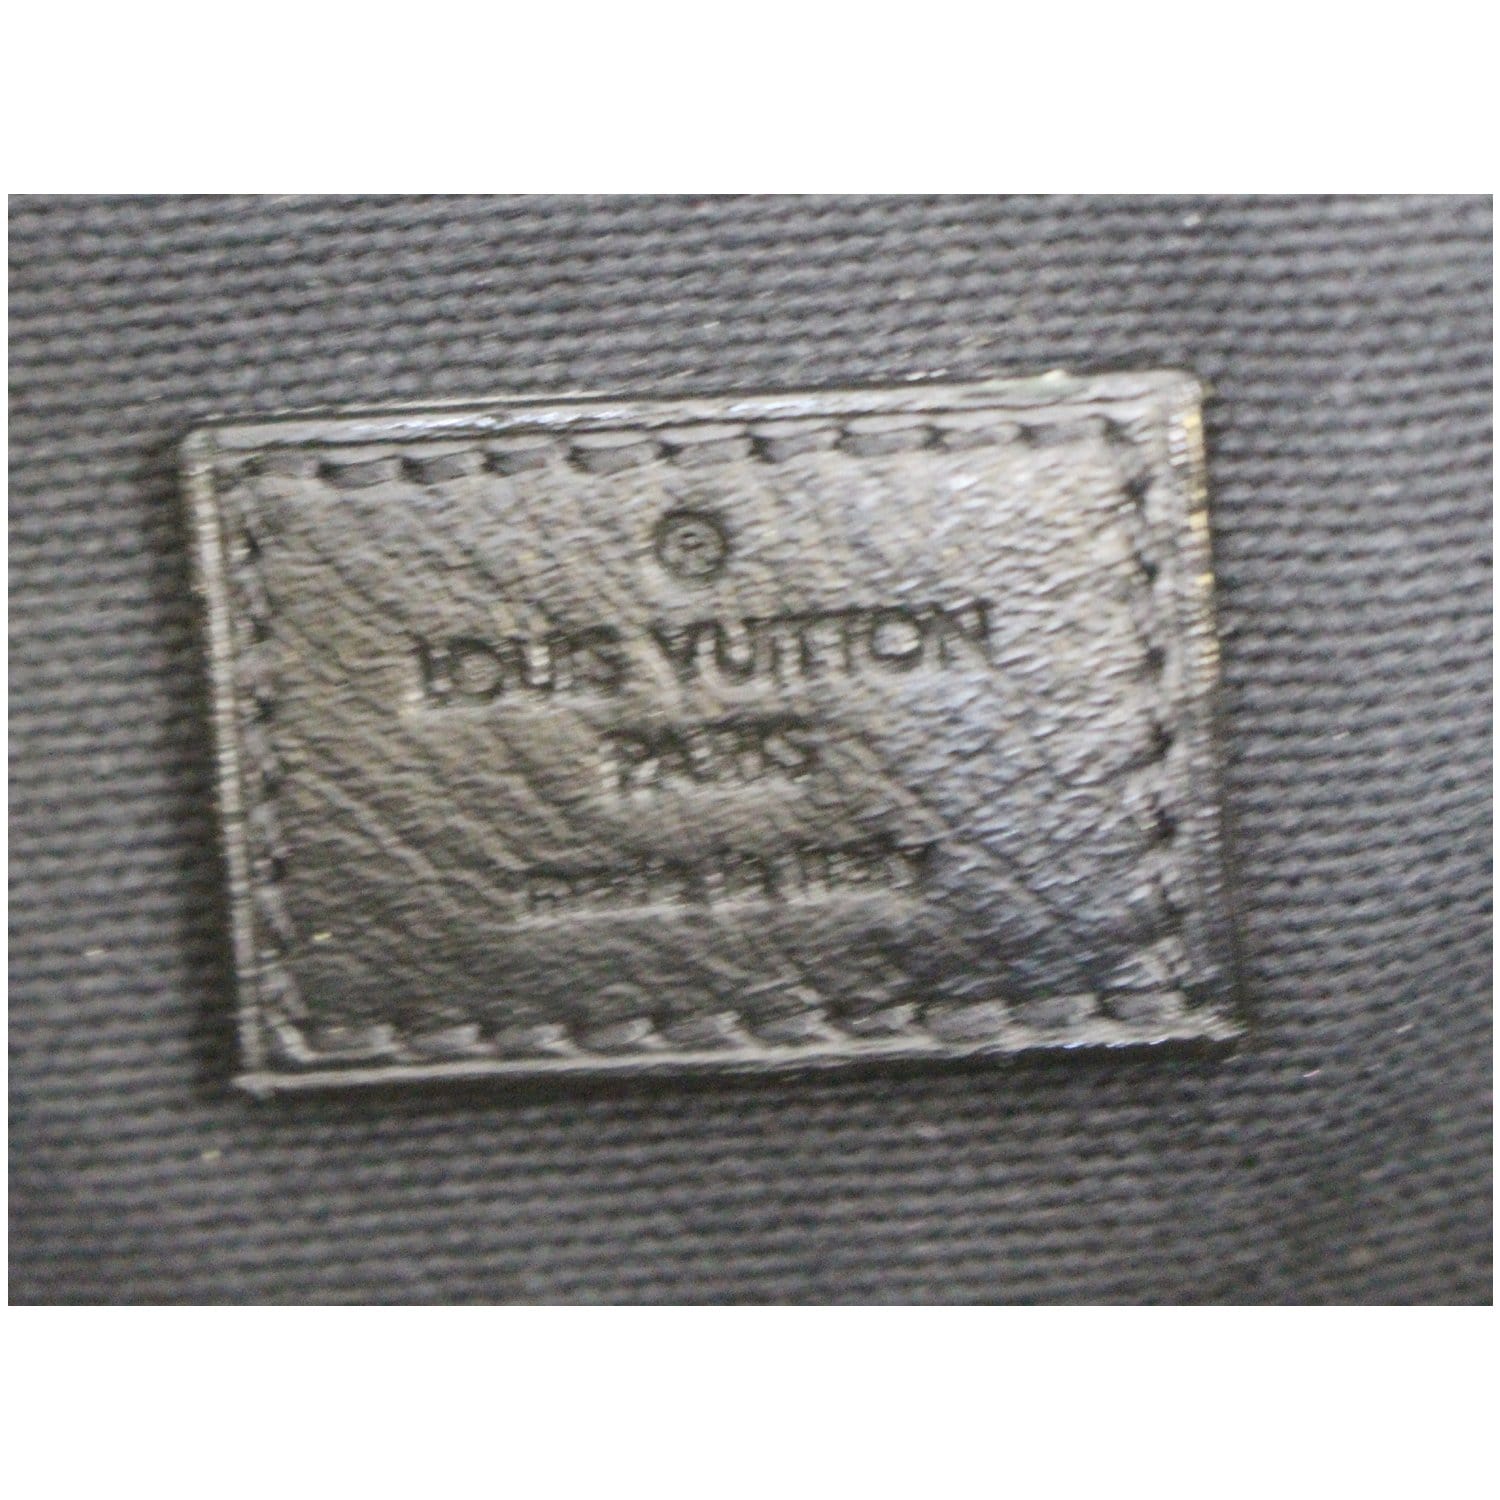 Motard handbag Louis Vuitton Black in Suede - 31395790